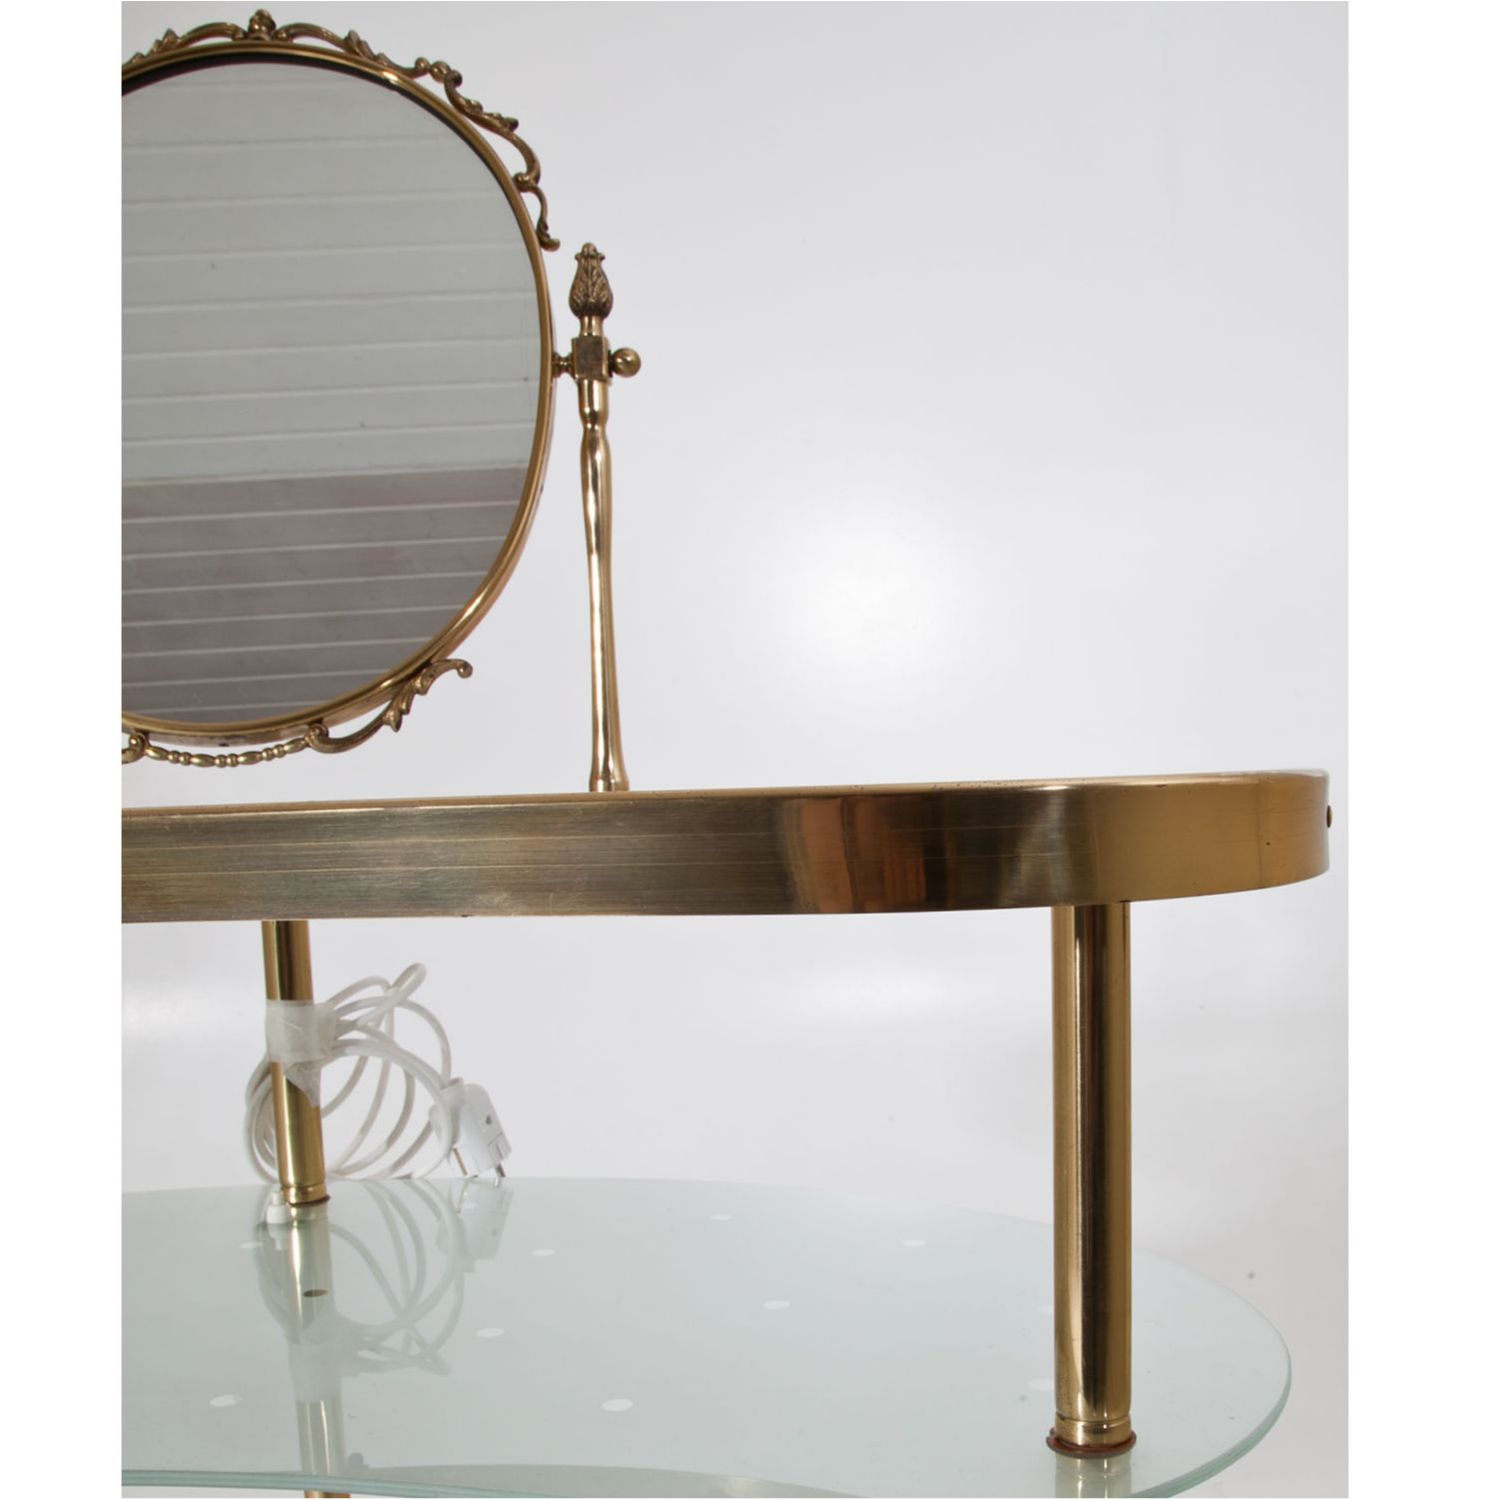 https://artorigo.com/ao_products/6394/l/furniture-vanity-tables-1950-1959-mid-century-modern-ehrl-fine-art-and-antiques--32507.JPG